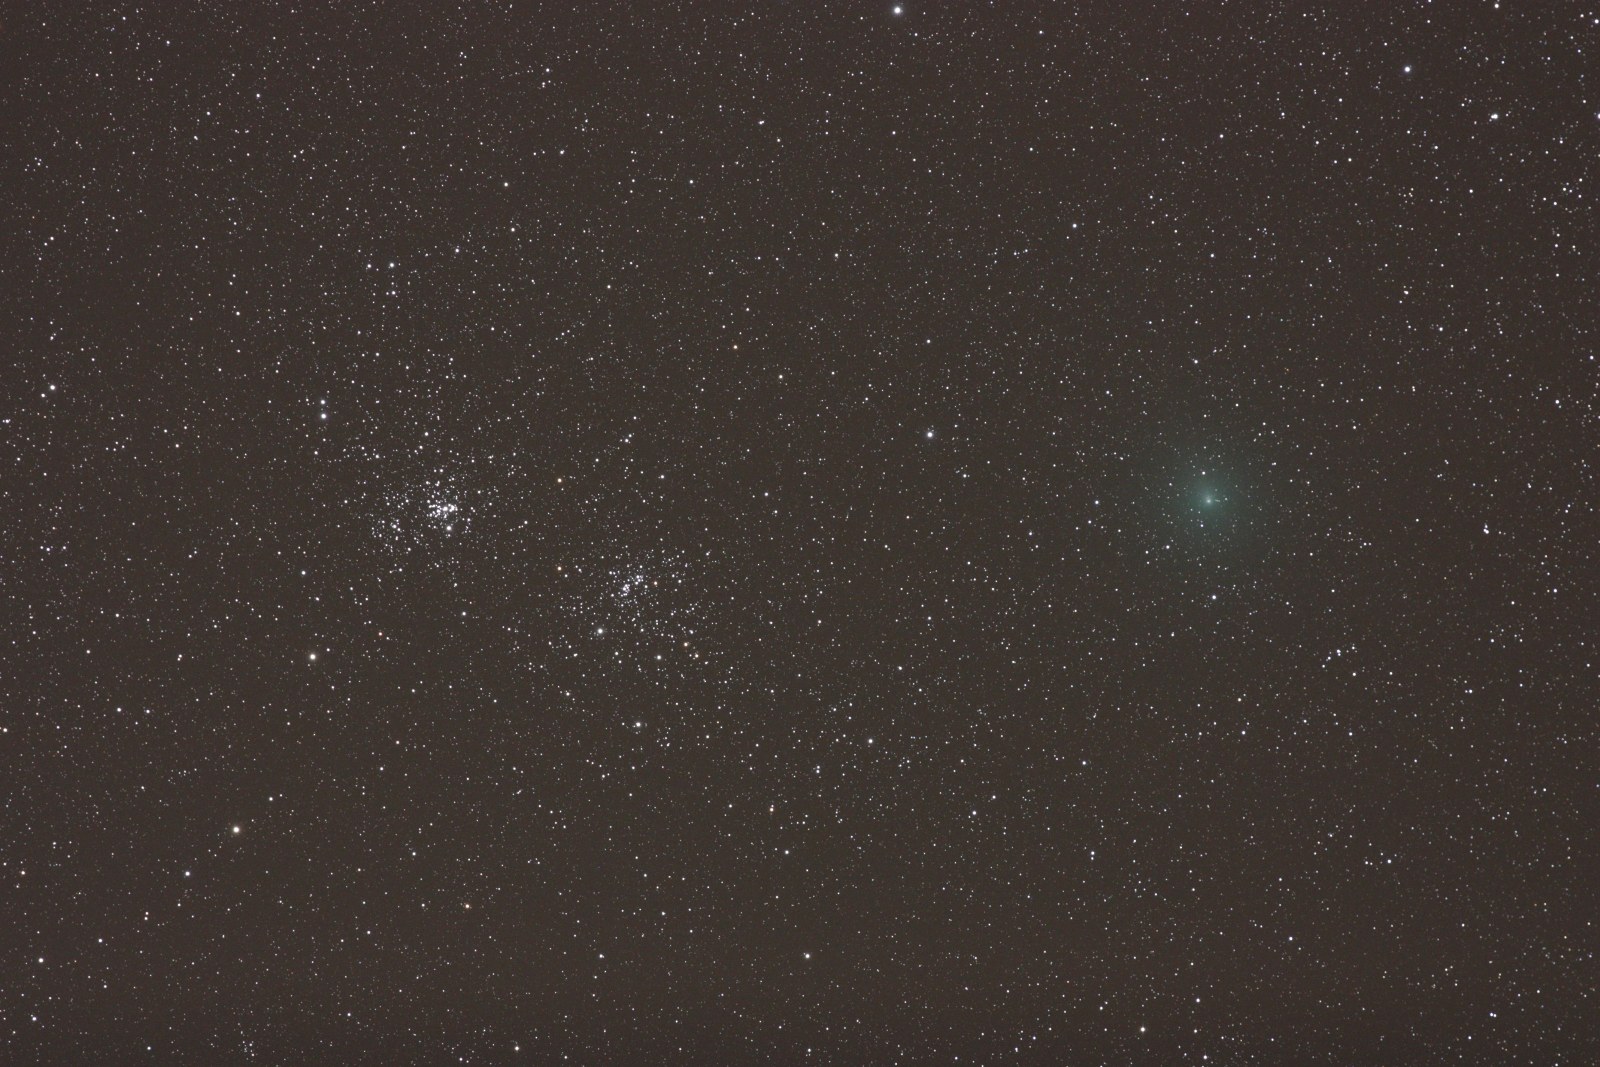 Komet Hartley 103P bei h+chi